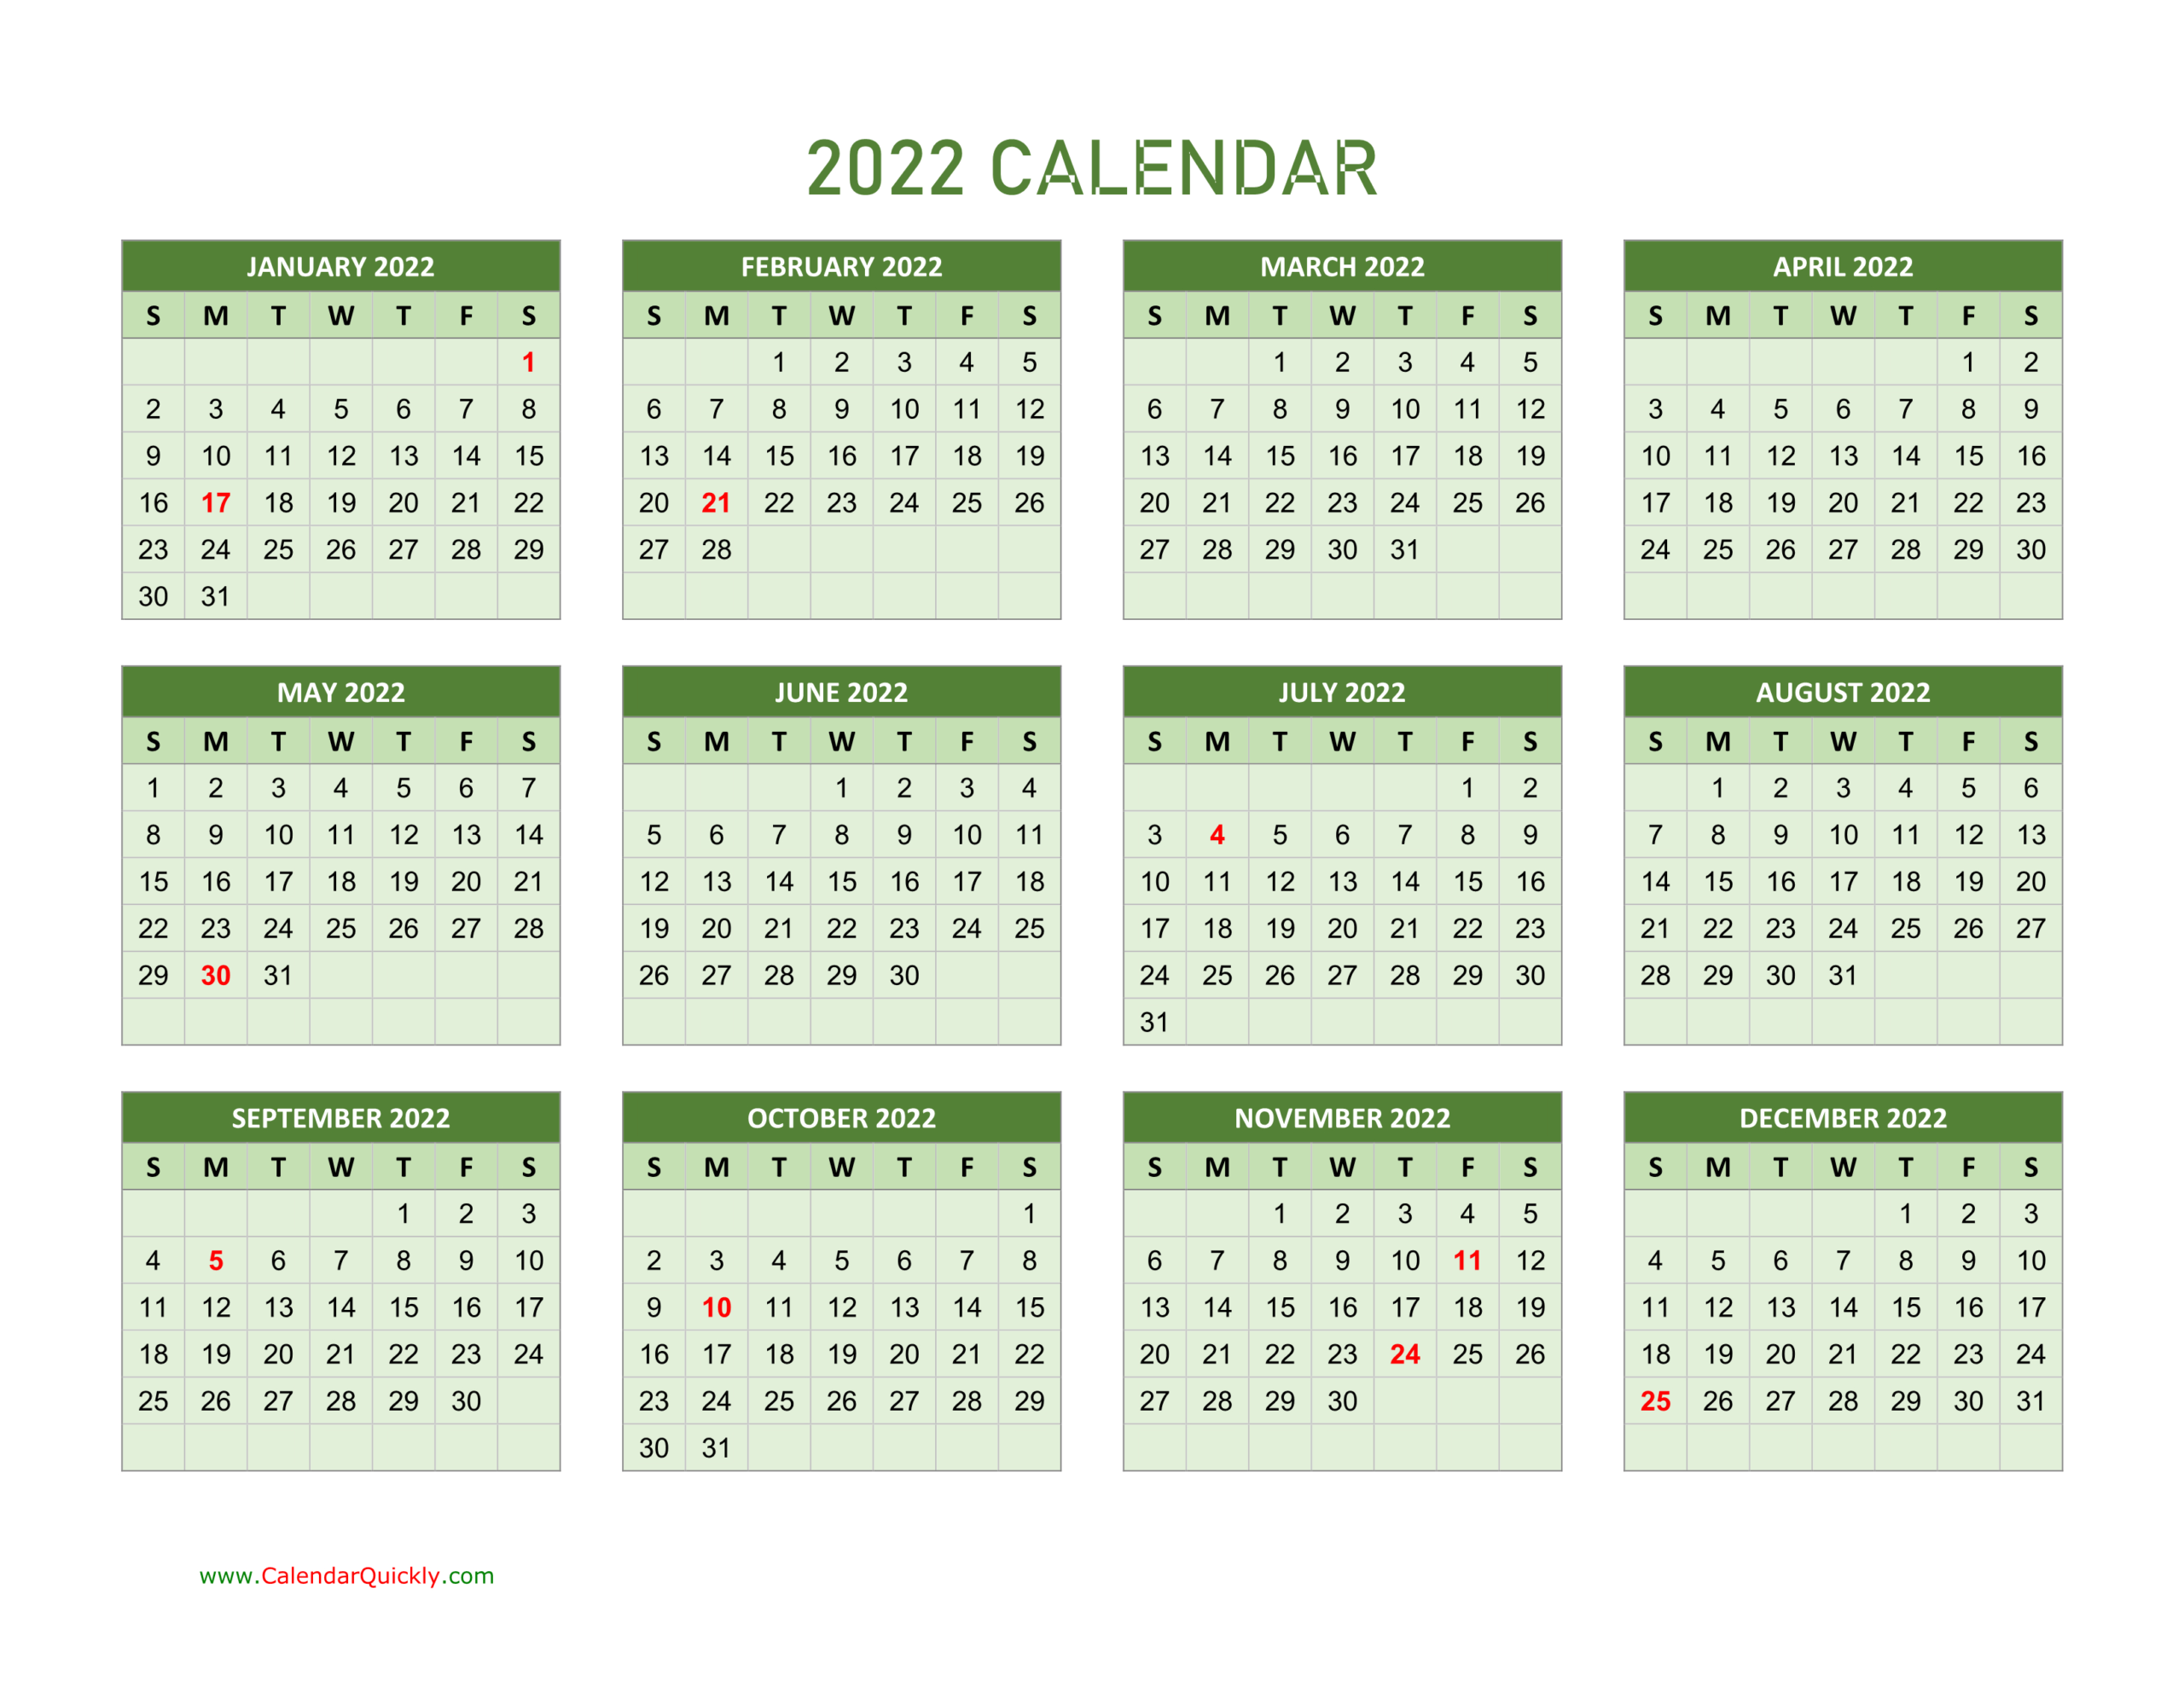 Yearly Calendar 2022 | Calendar Quickly  Free 2022 Calendar Printable Pdf